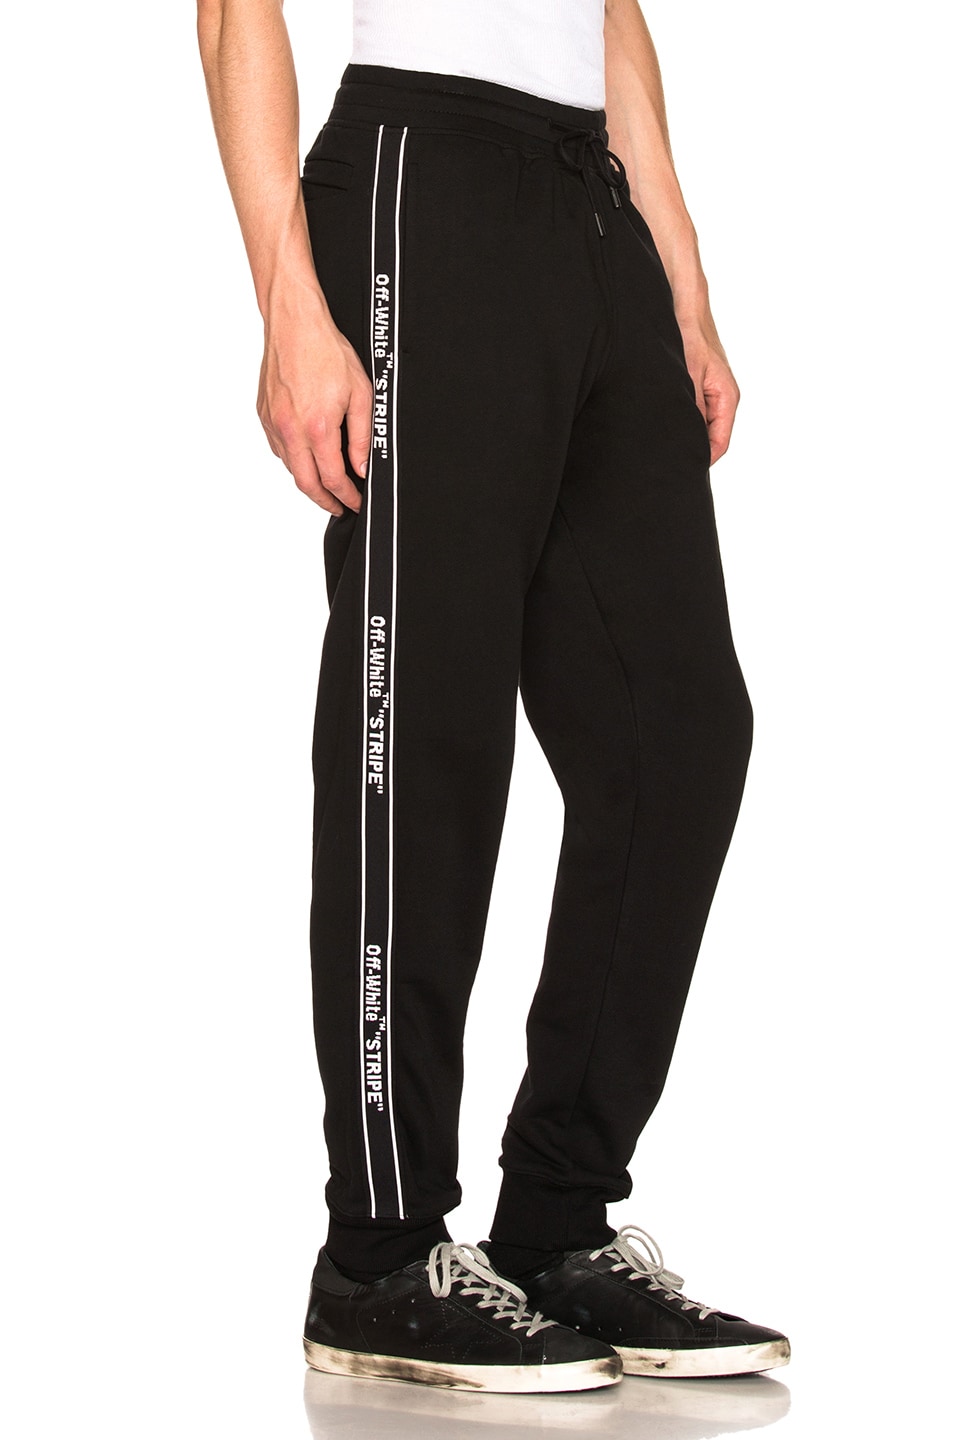 OFF-WHITE Stripe Sweatpants in Black | FWRD